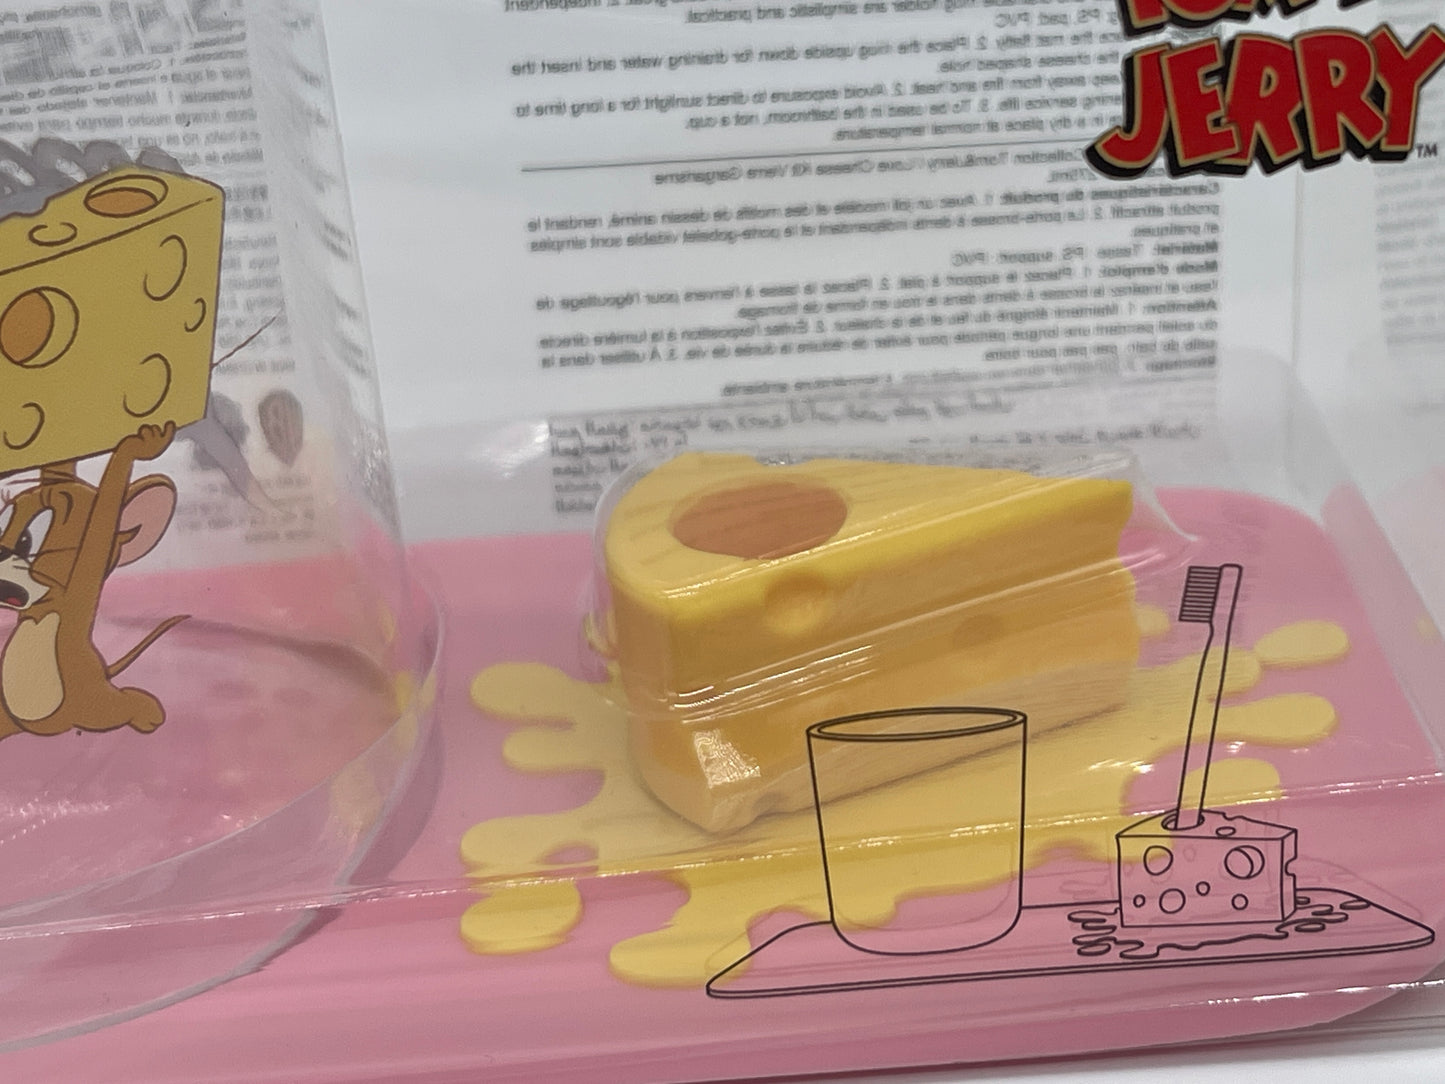 MINISO Japan "Tom & Jerry Zahnputzbecher und Halter" Tooth Mug Kit